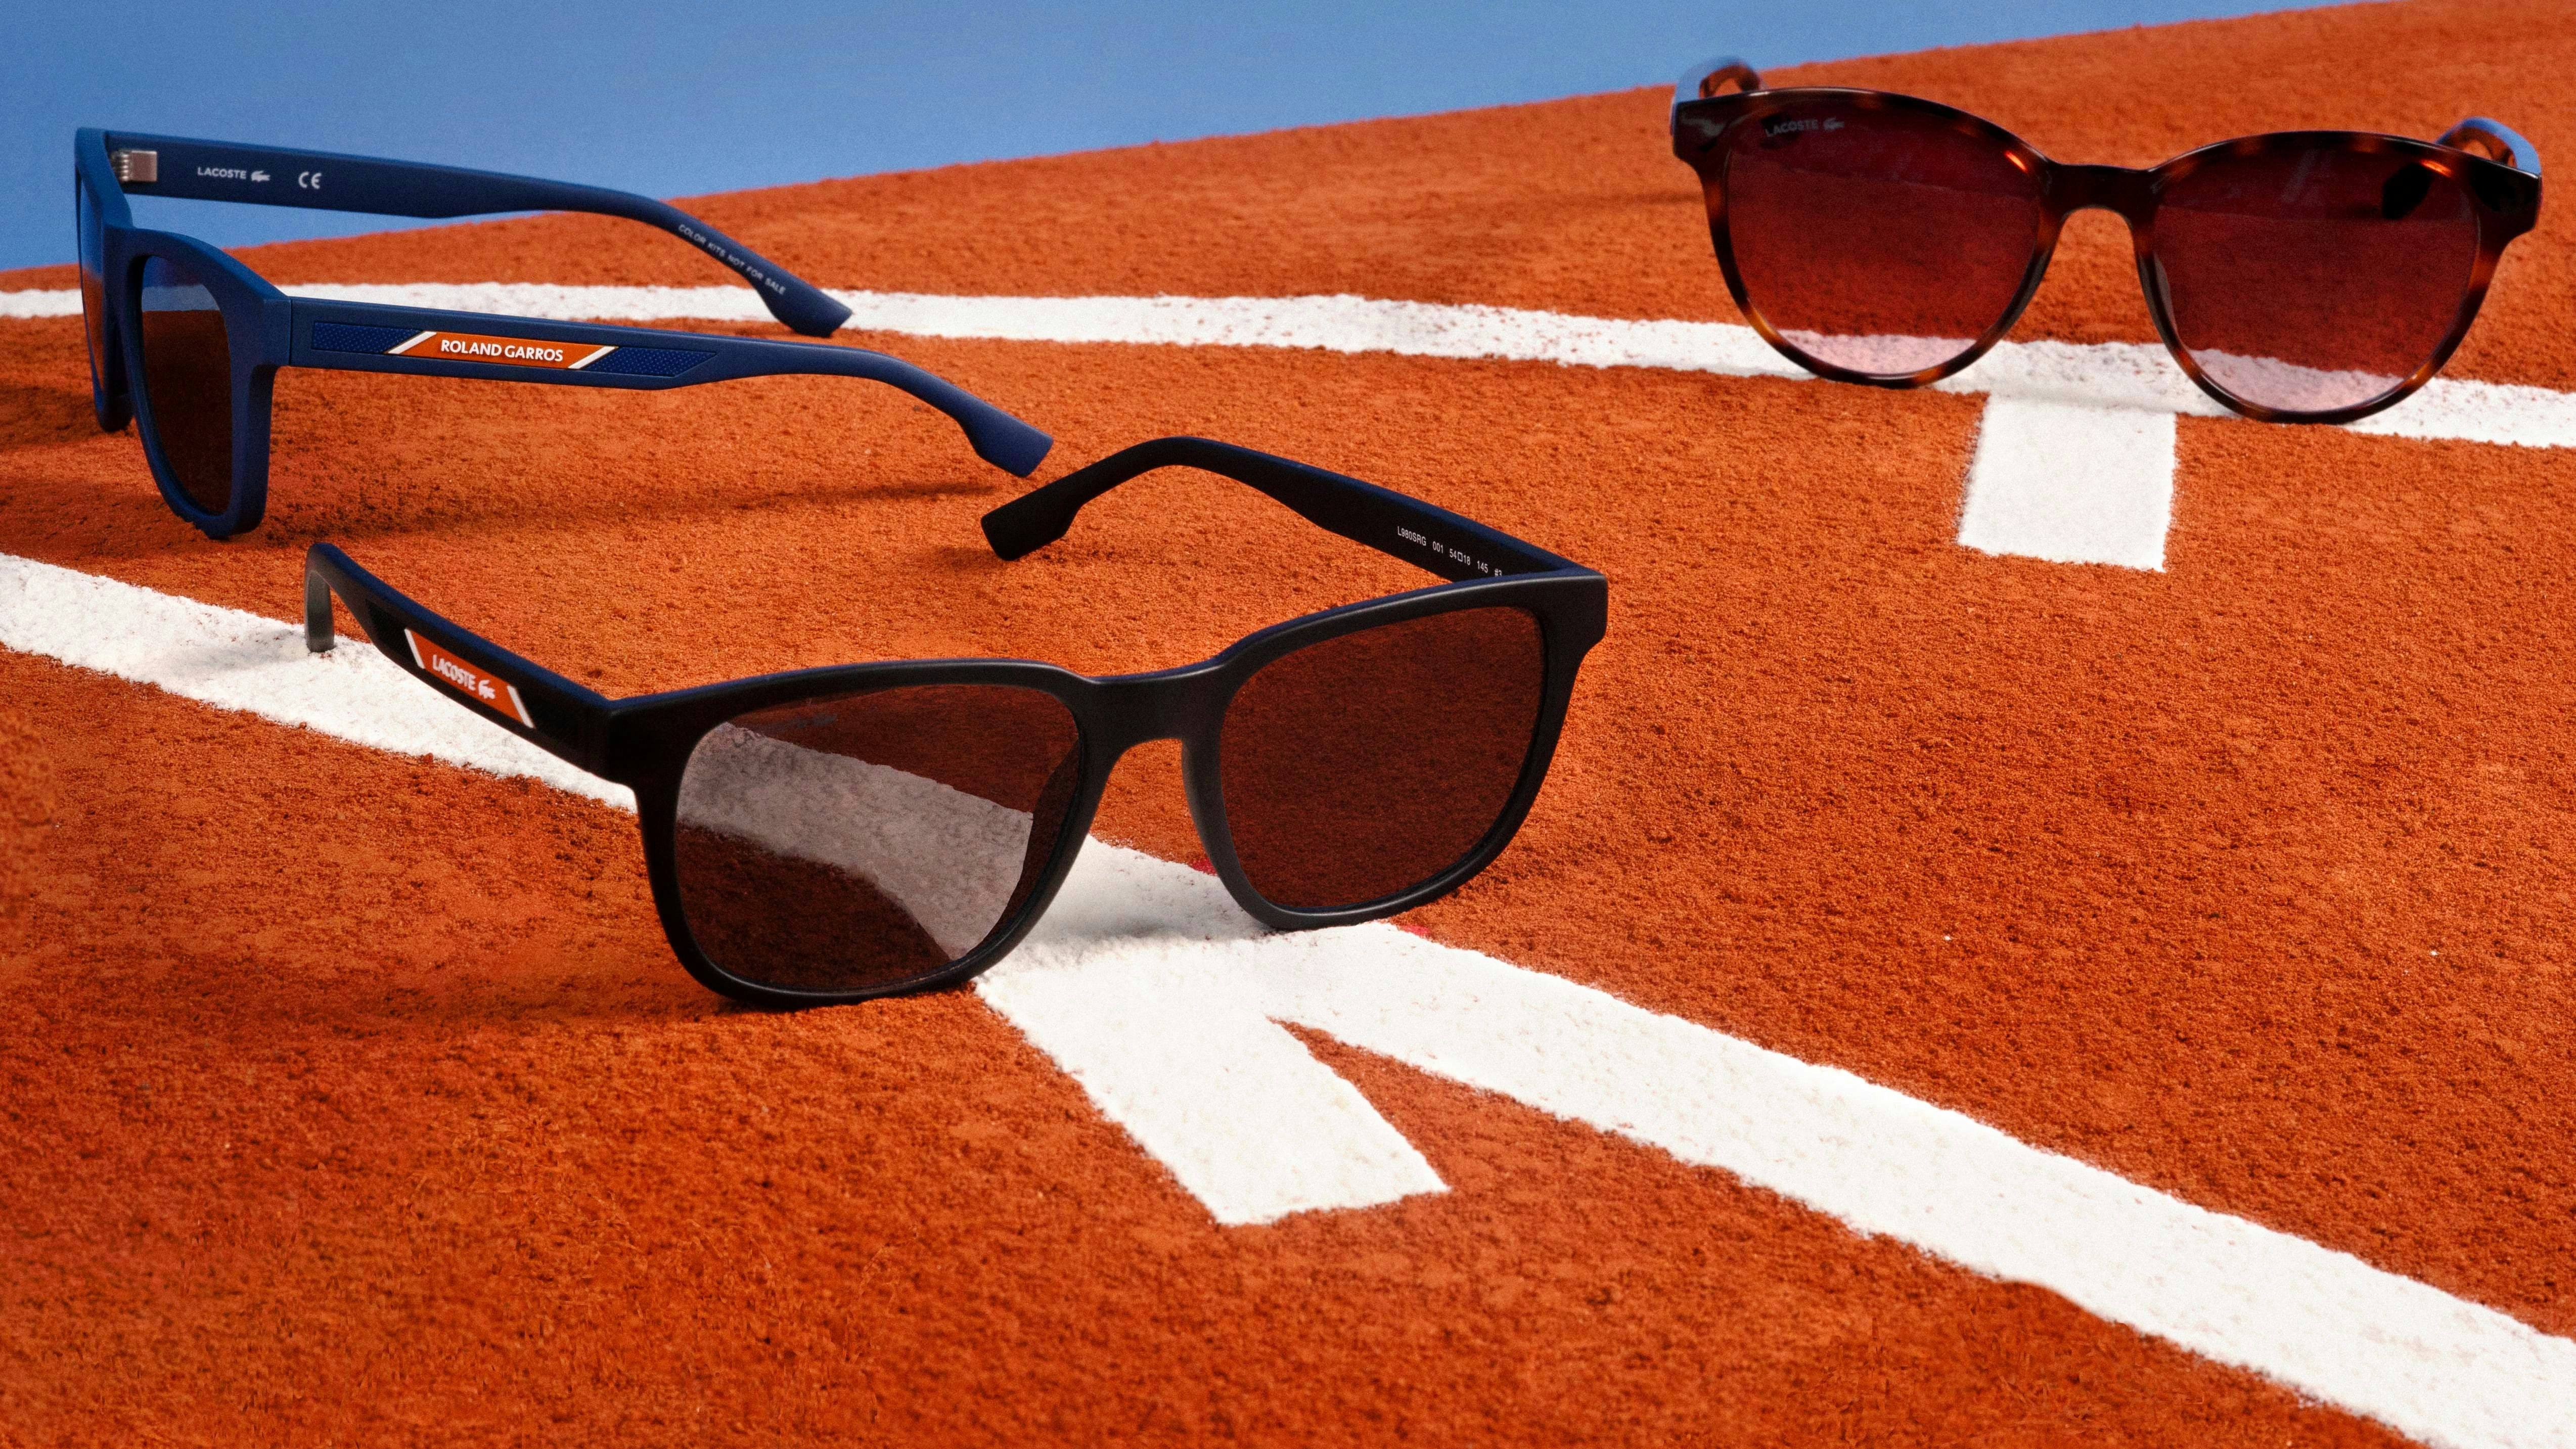 Lacoste sunglasses - Roland-Garros